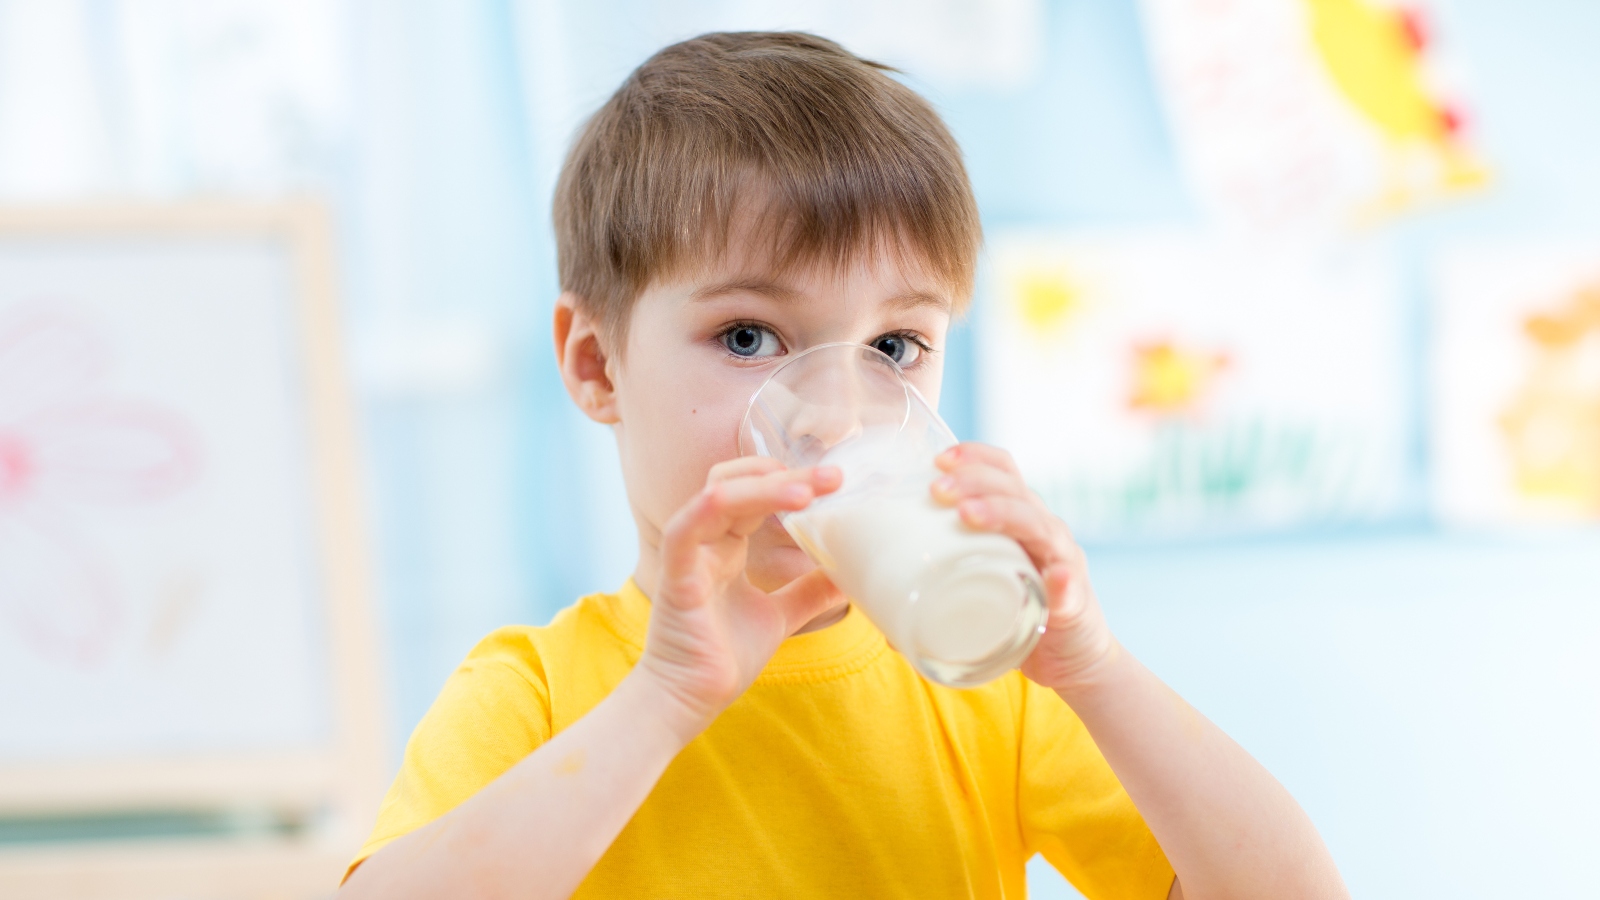 A child wearing a yellow t-shirt drinking milk